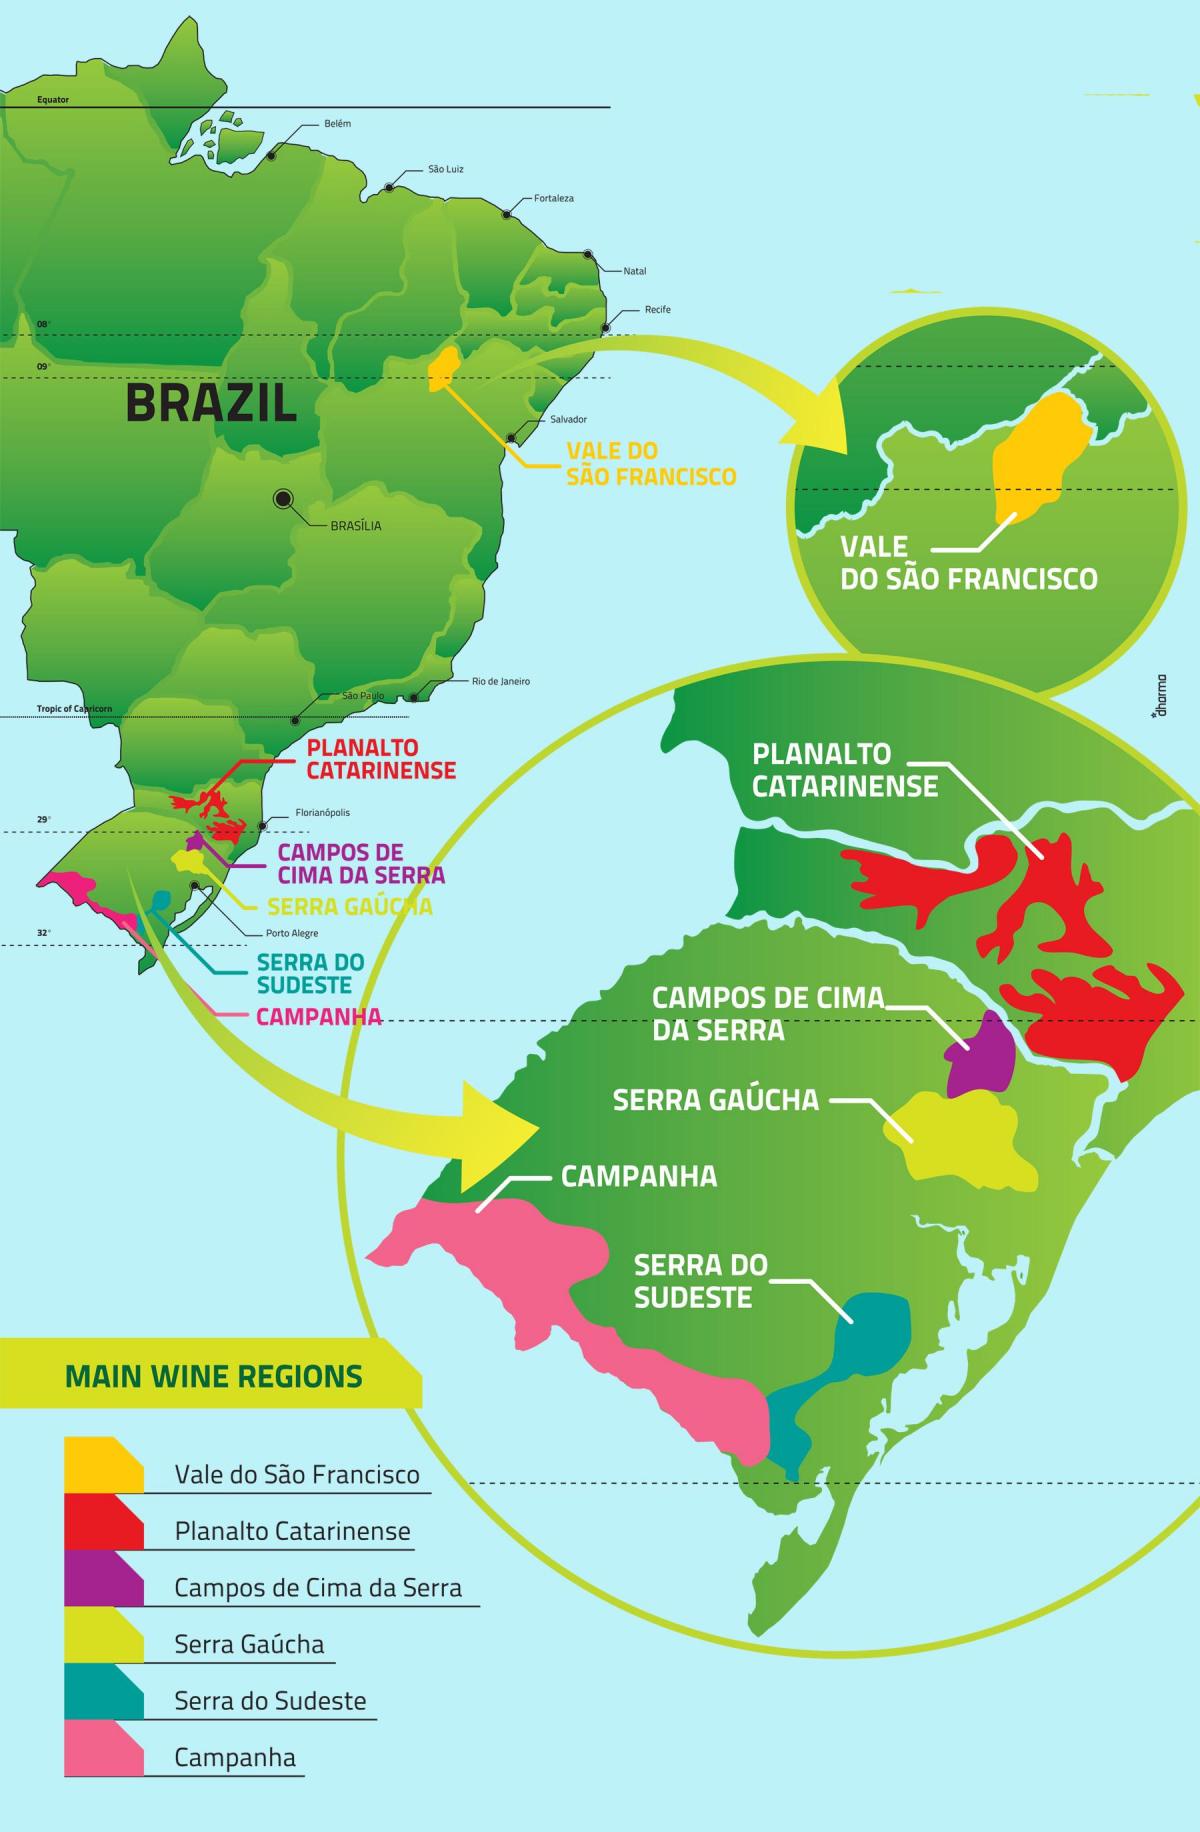 Mappa dei vigneti del Brasile